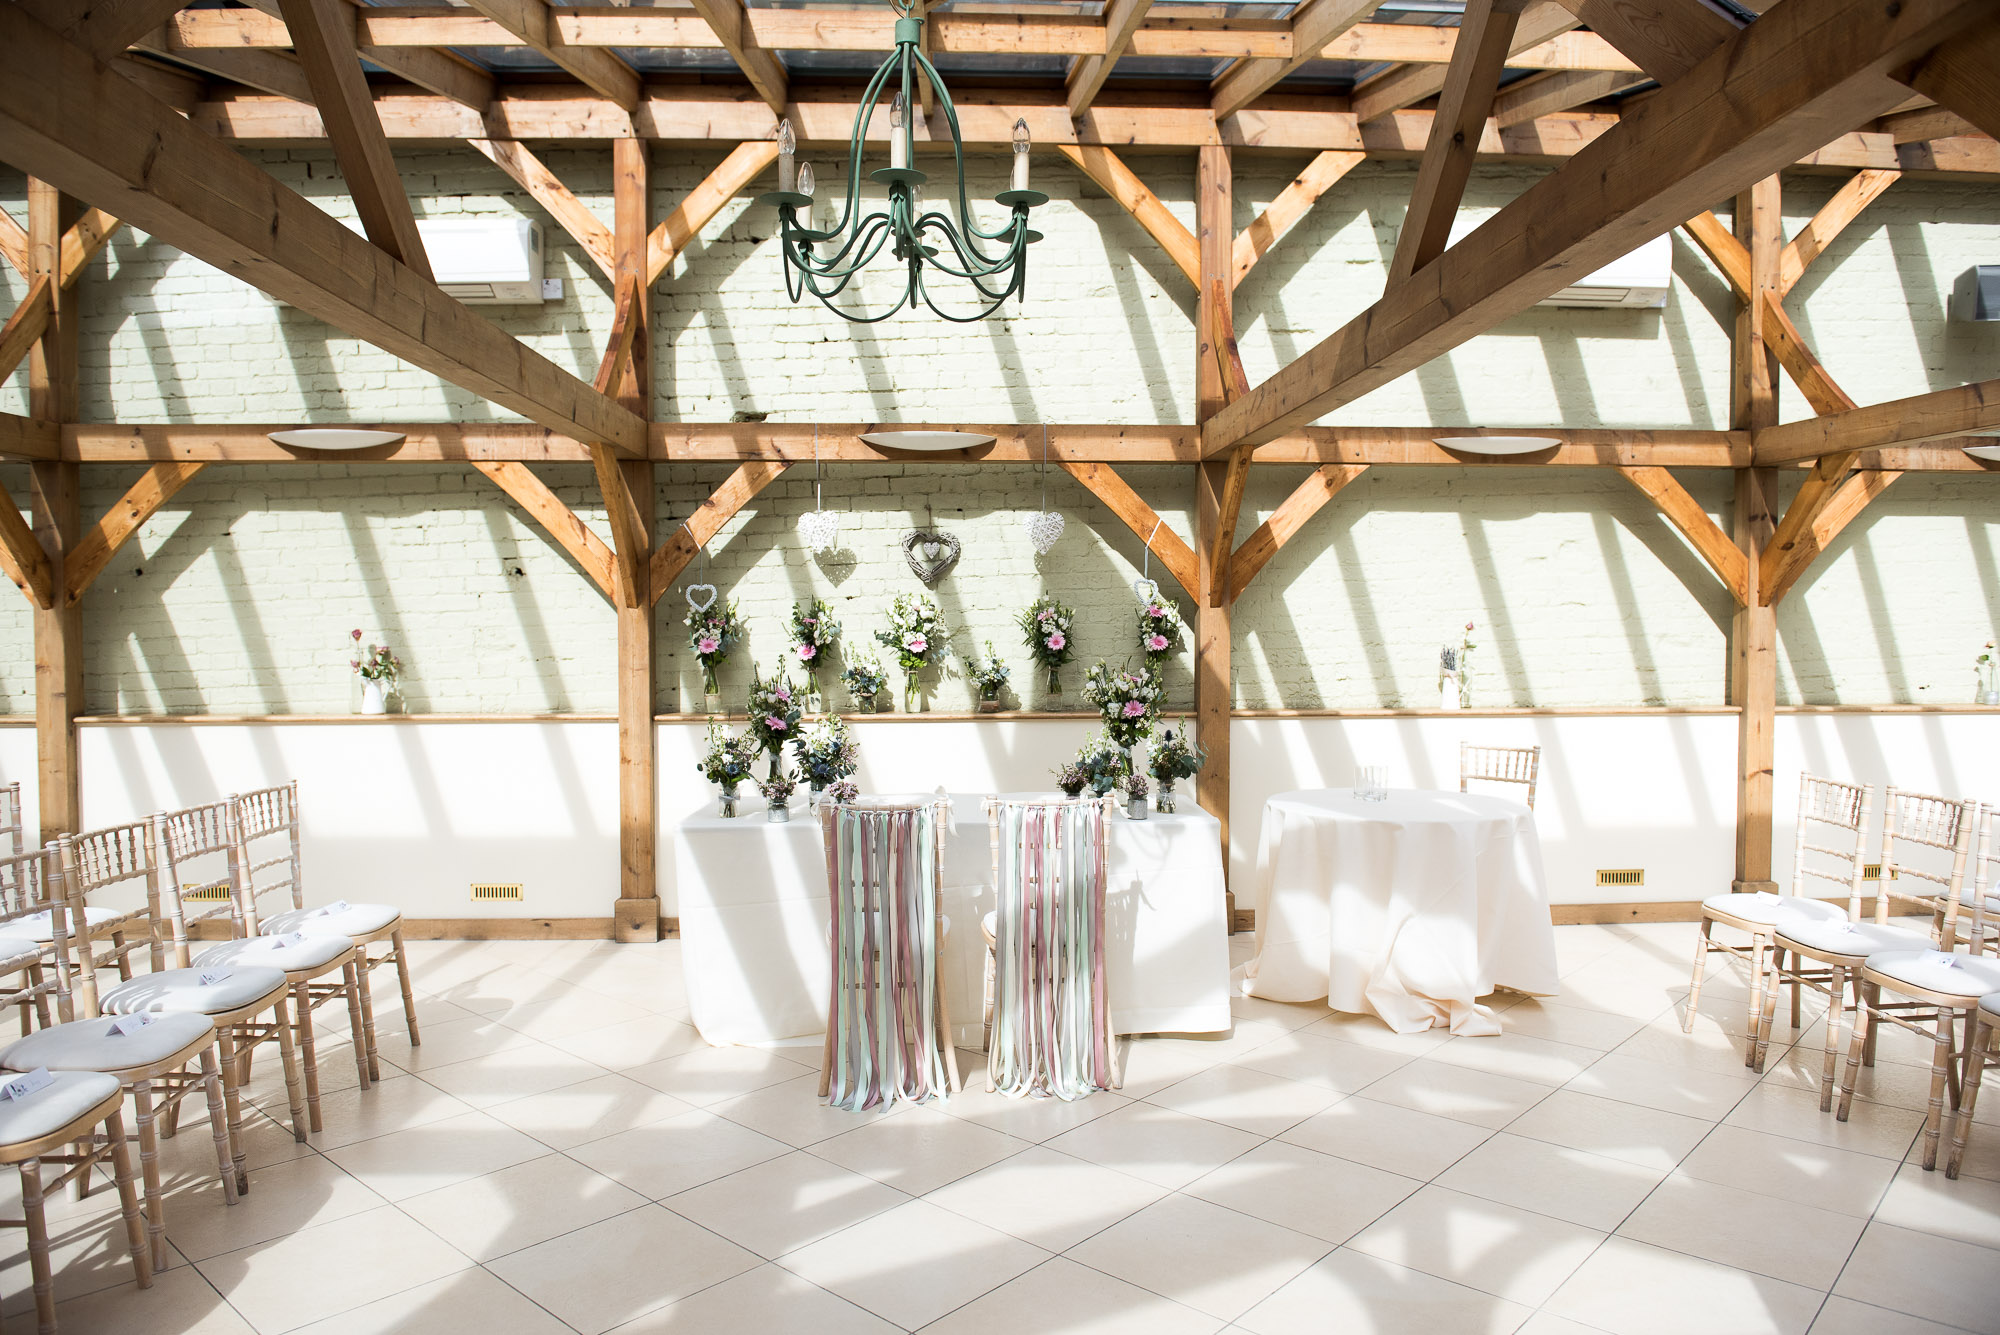 Gaynes Park conservatory filled with wedding details